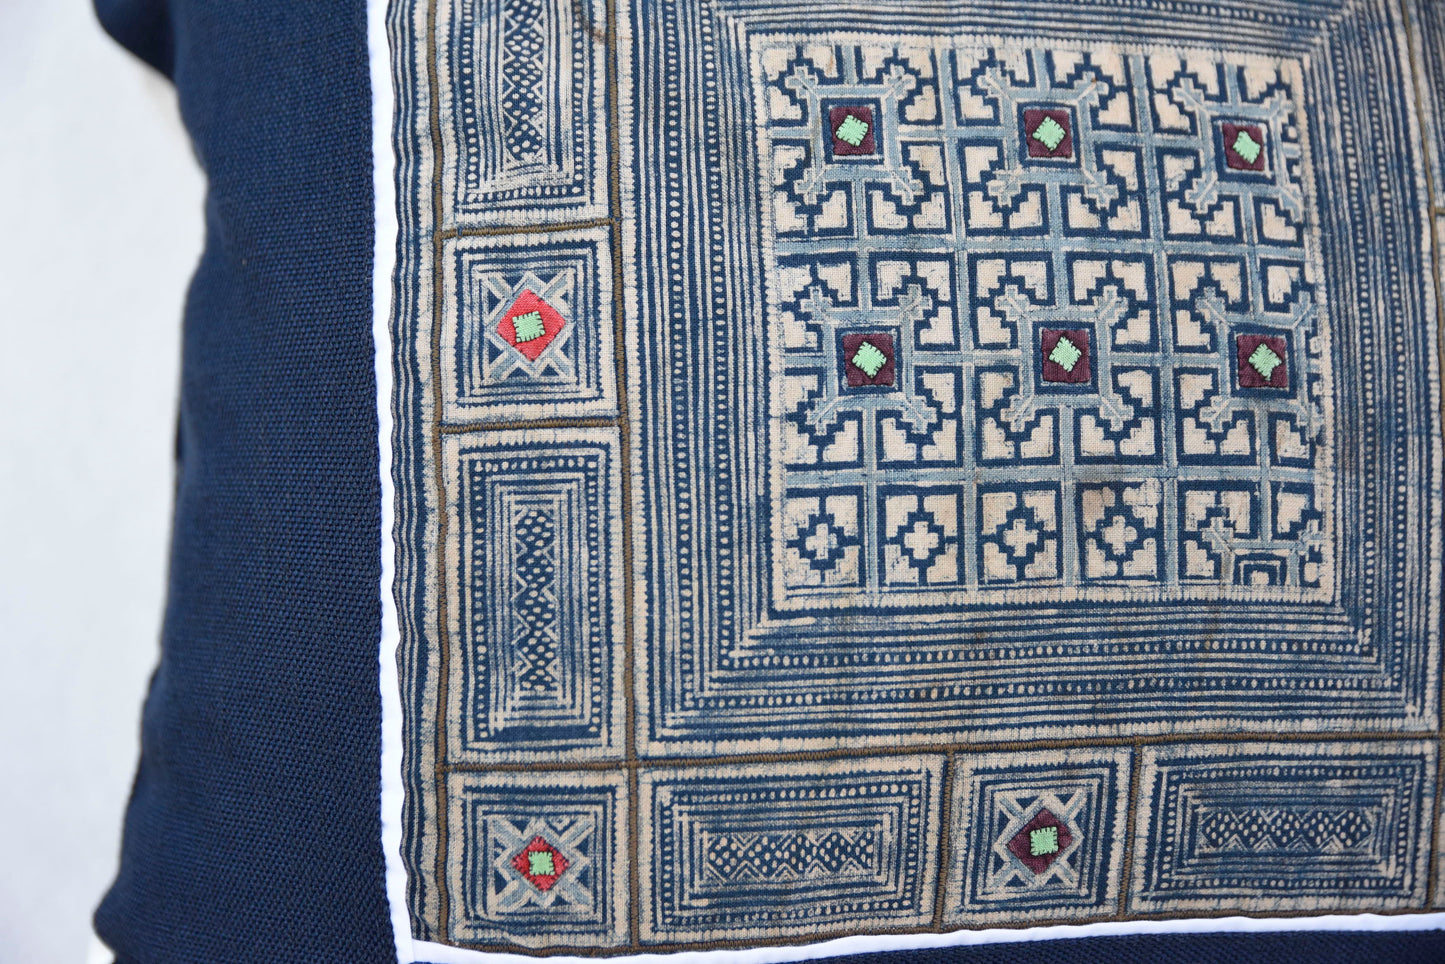 Navy Blue Cushion Cover, H'mong vintage cloth, batik painting pattern